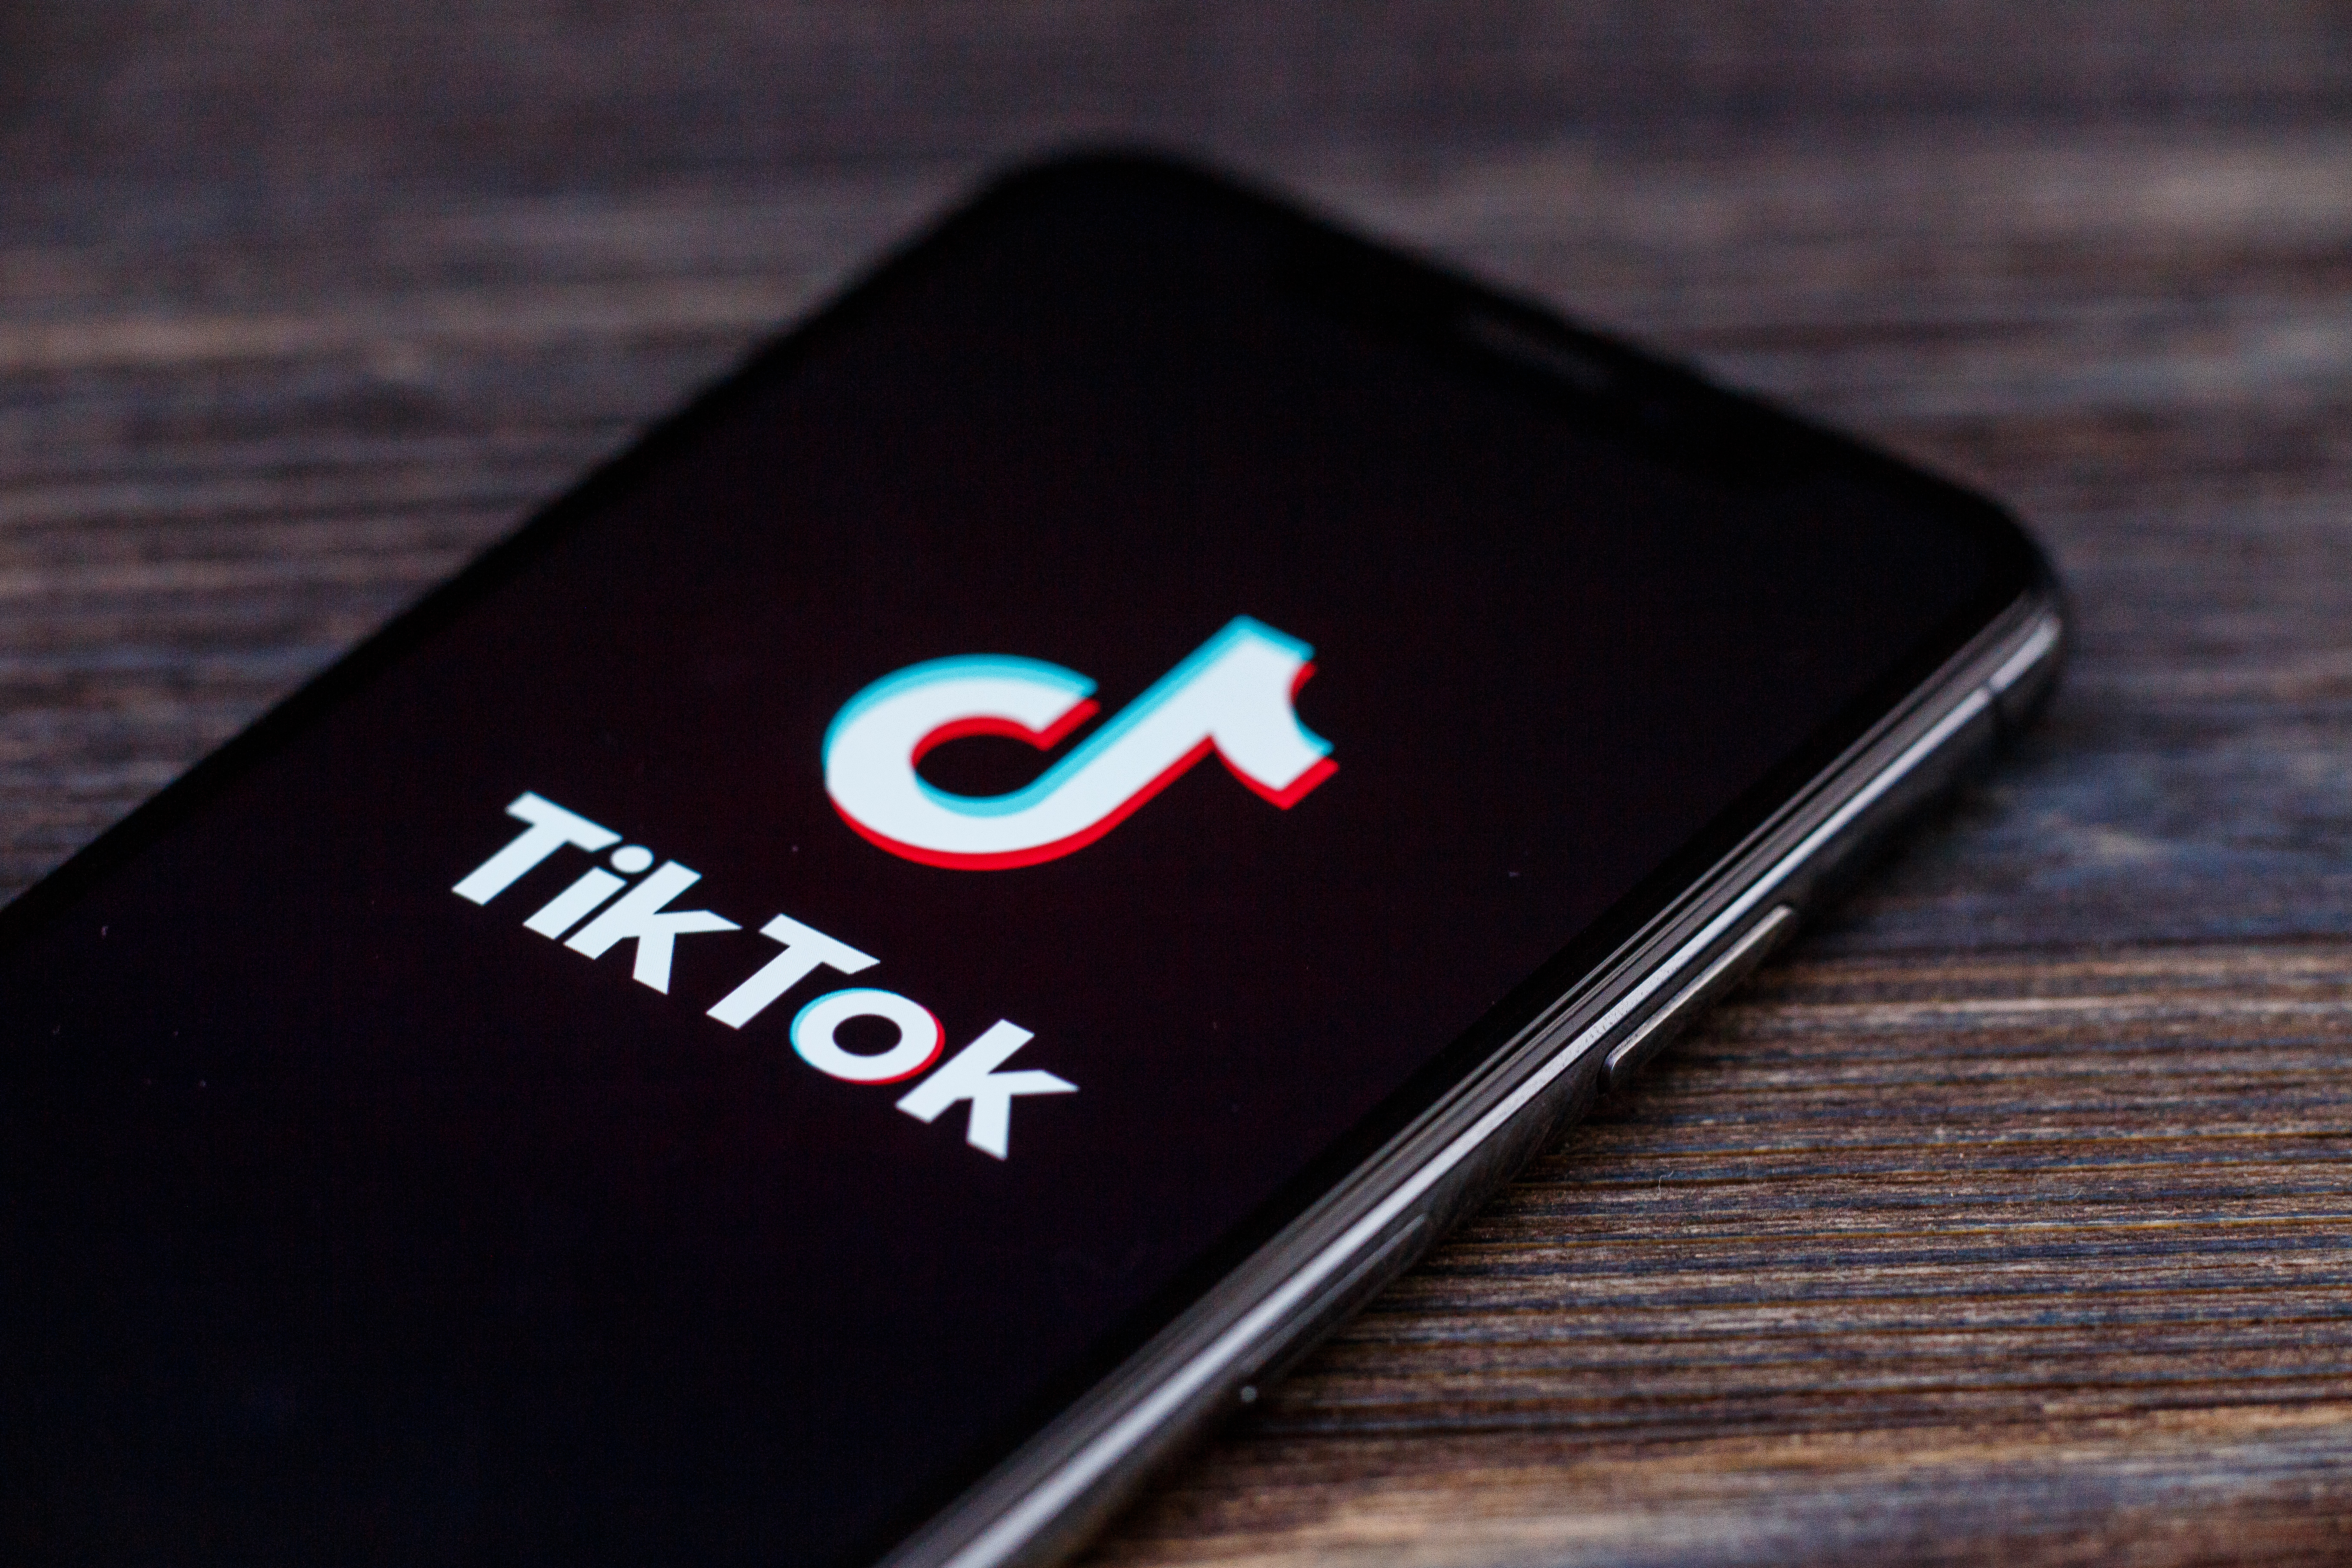 A phone showing the TikTok logo | Source: Shutterstock